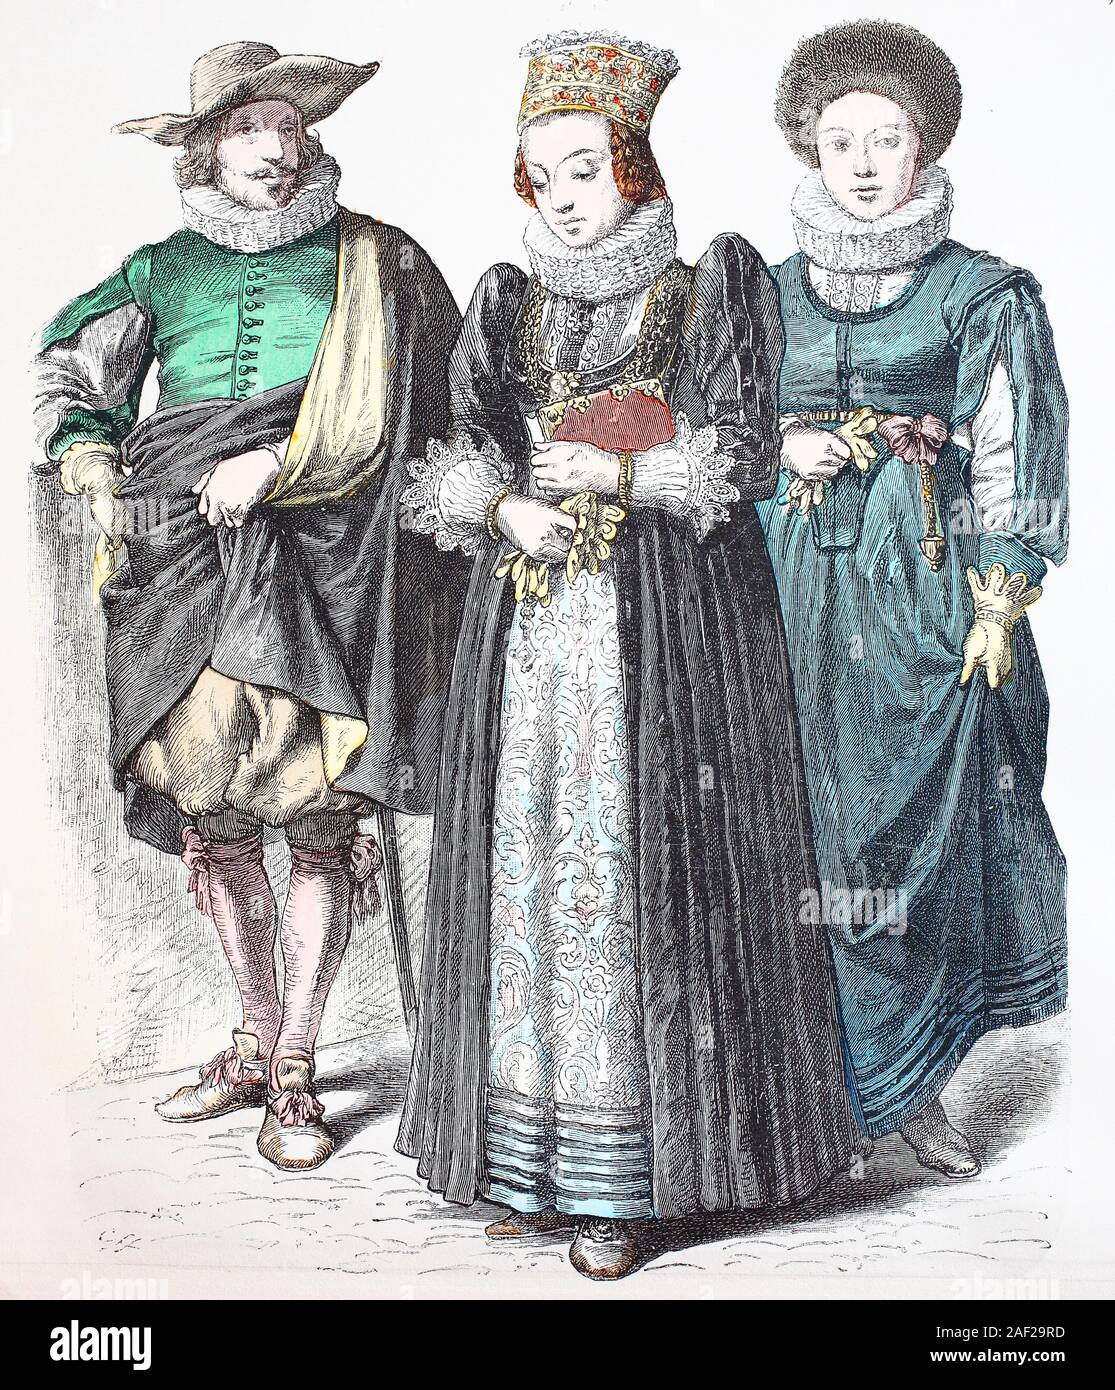 Swiss Girl Traditional Dress Stockfotos und -bilder Kaufen - Alamy